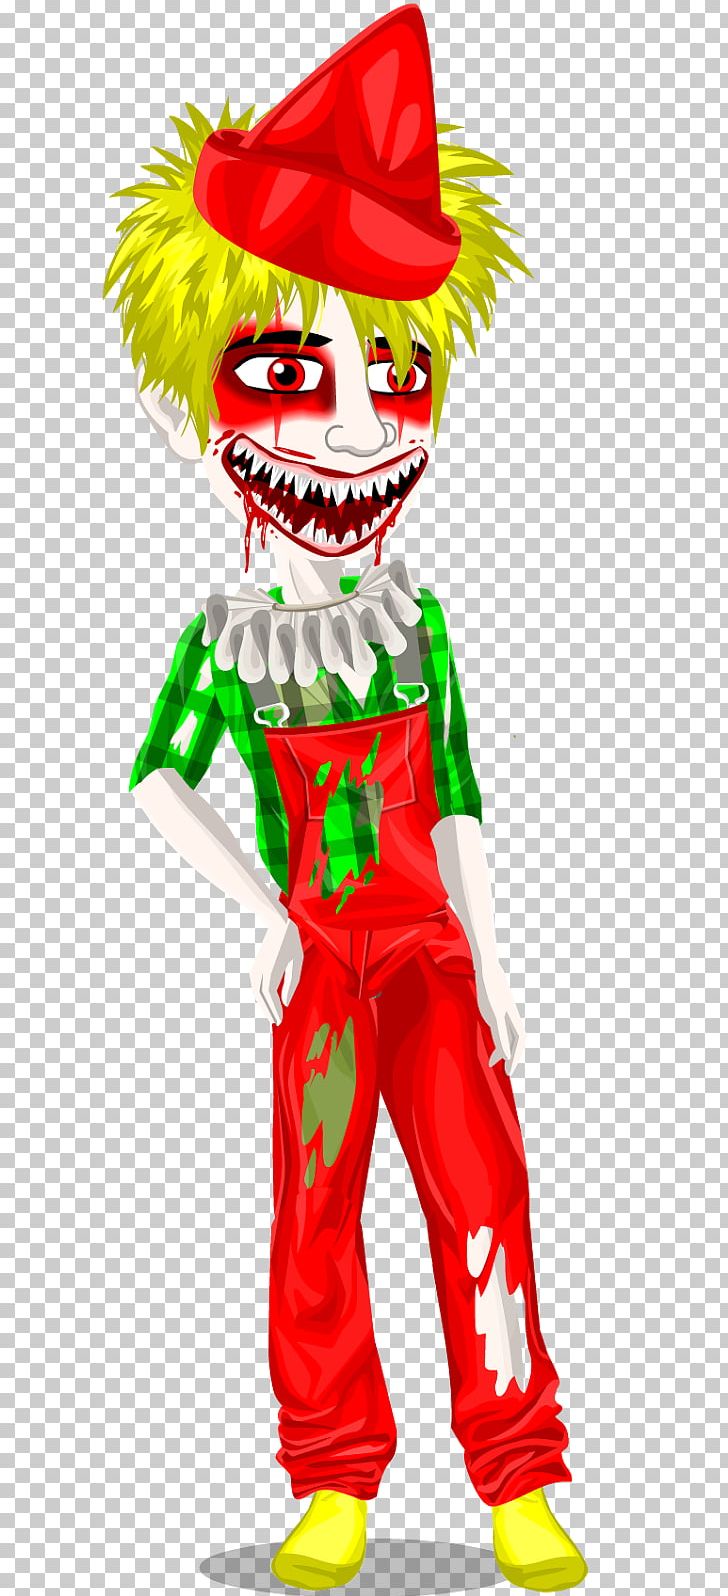 Clown Cartoon Costume Mascot Character PNG, Clipart, Art, Cartoon, Character, Christmas, Clown Free PNG Download